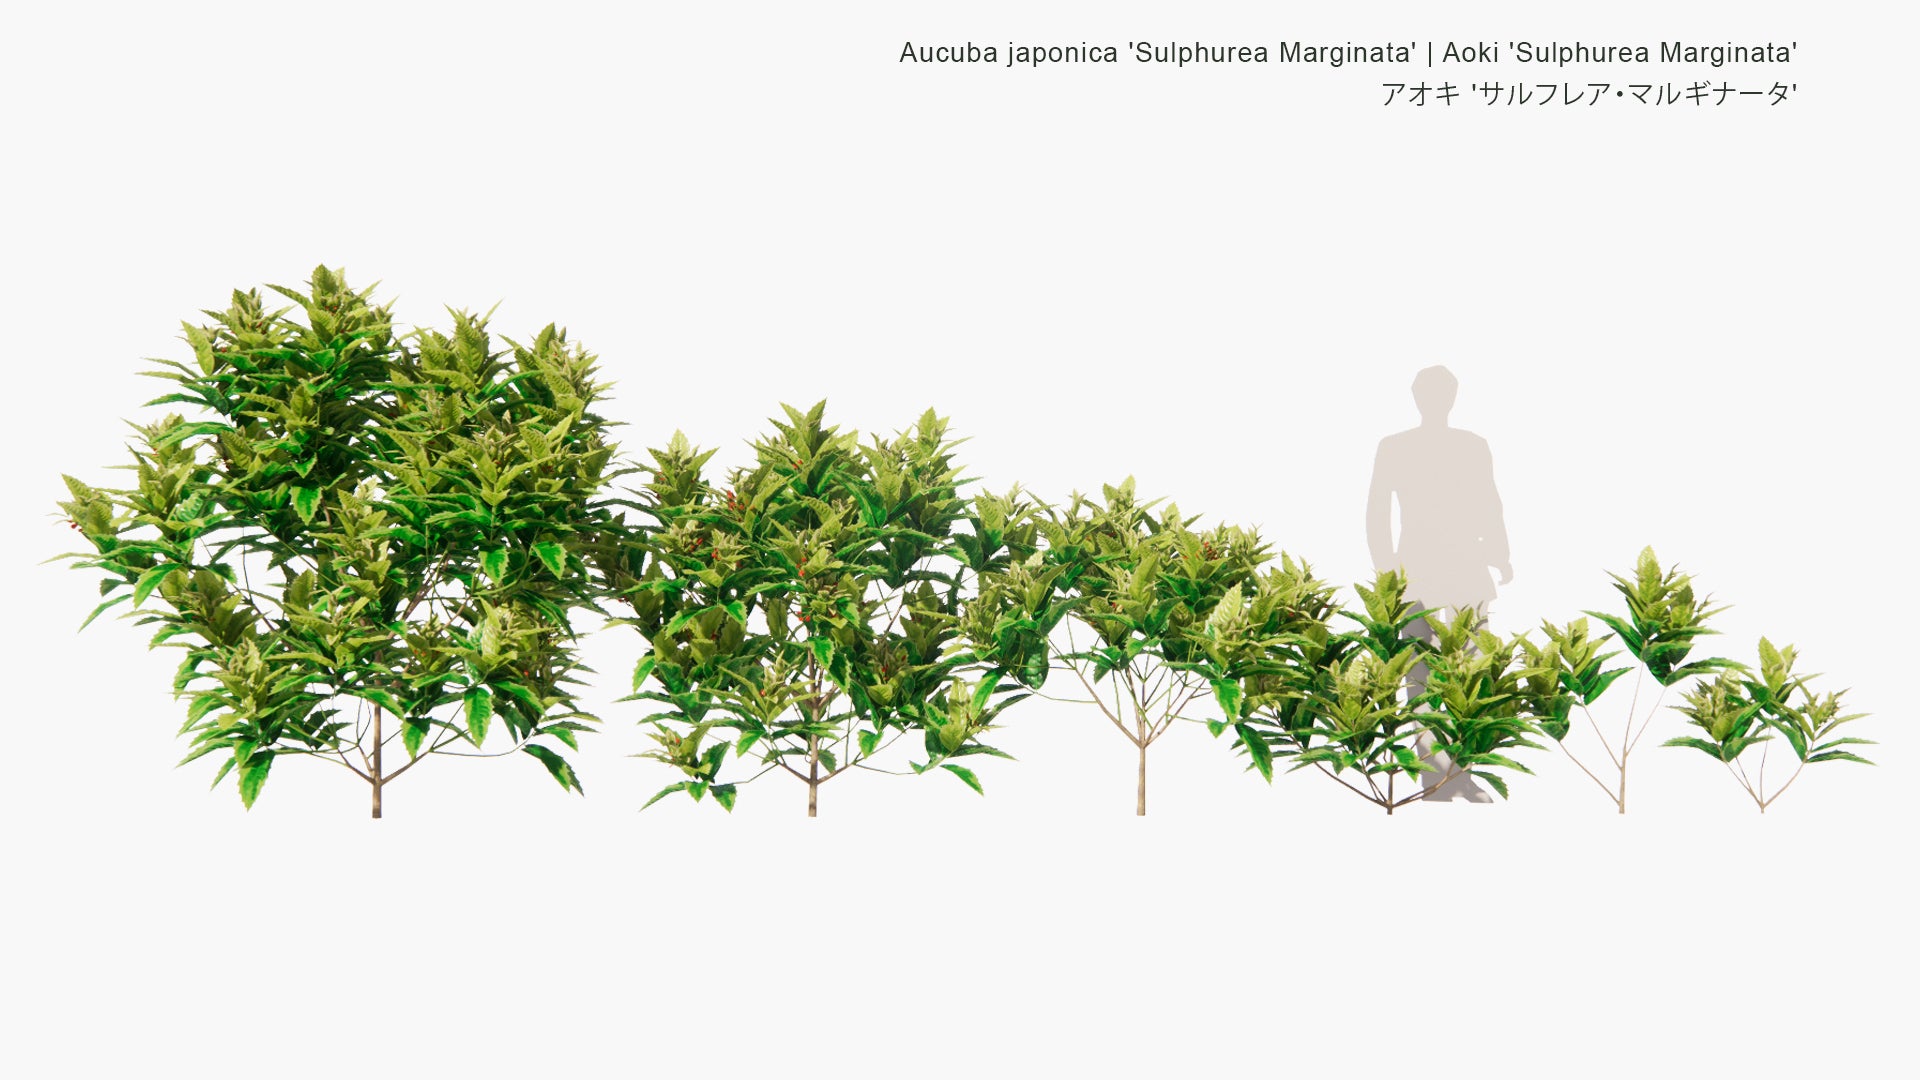 Low Poly Aucuba Japonica 'Sulphurea Marginata' - Aoki 'Sulphurea Marginata' , アオキ 'サルフレア・マルギナータ' (3D Model)